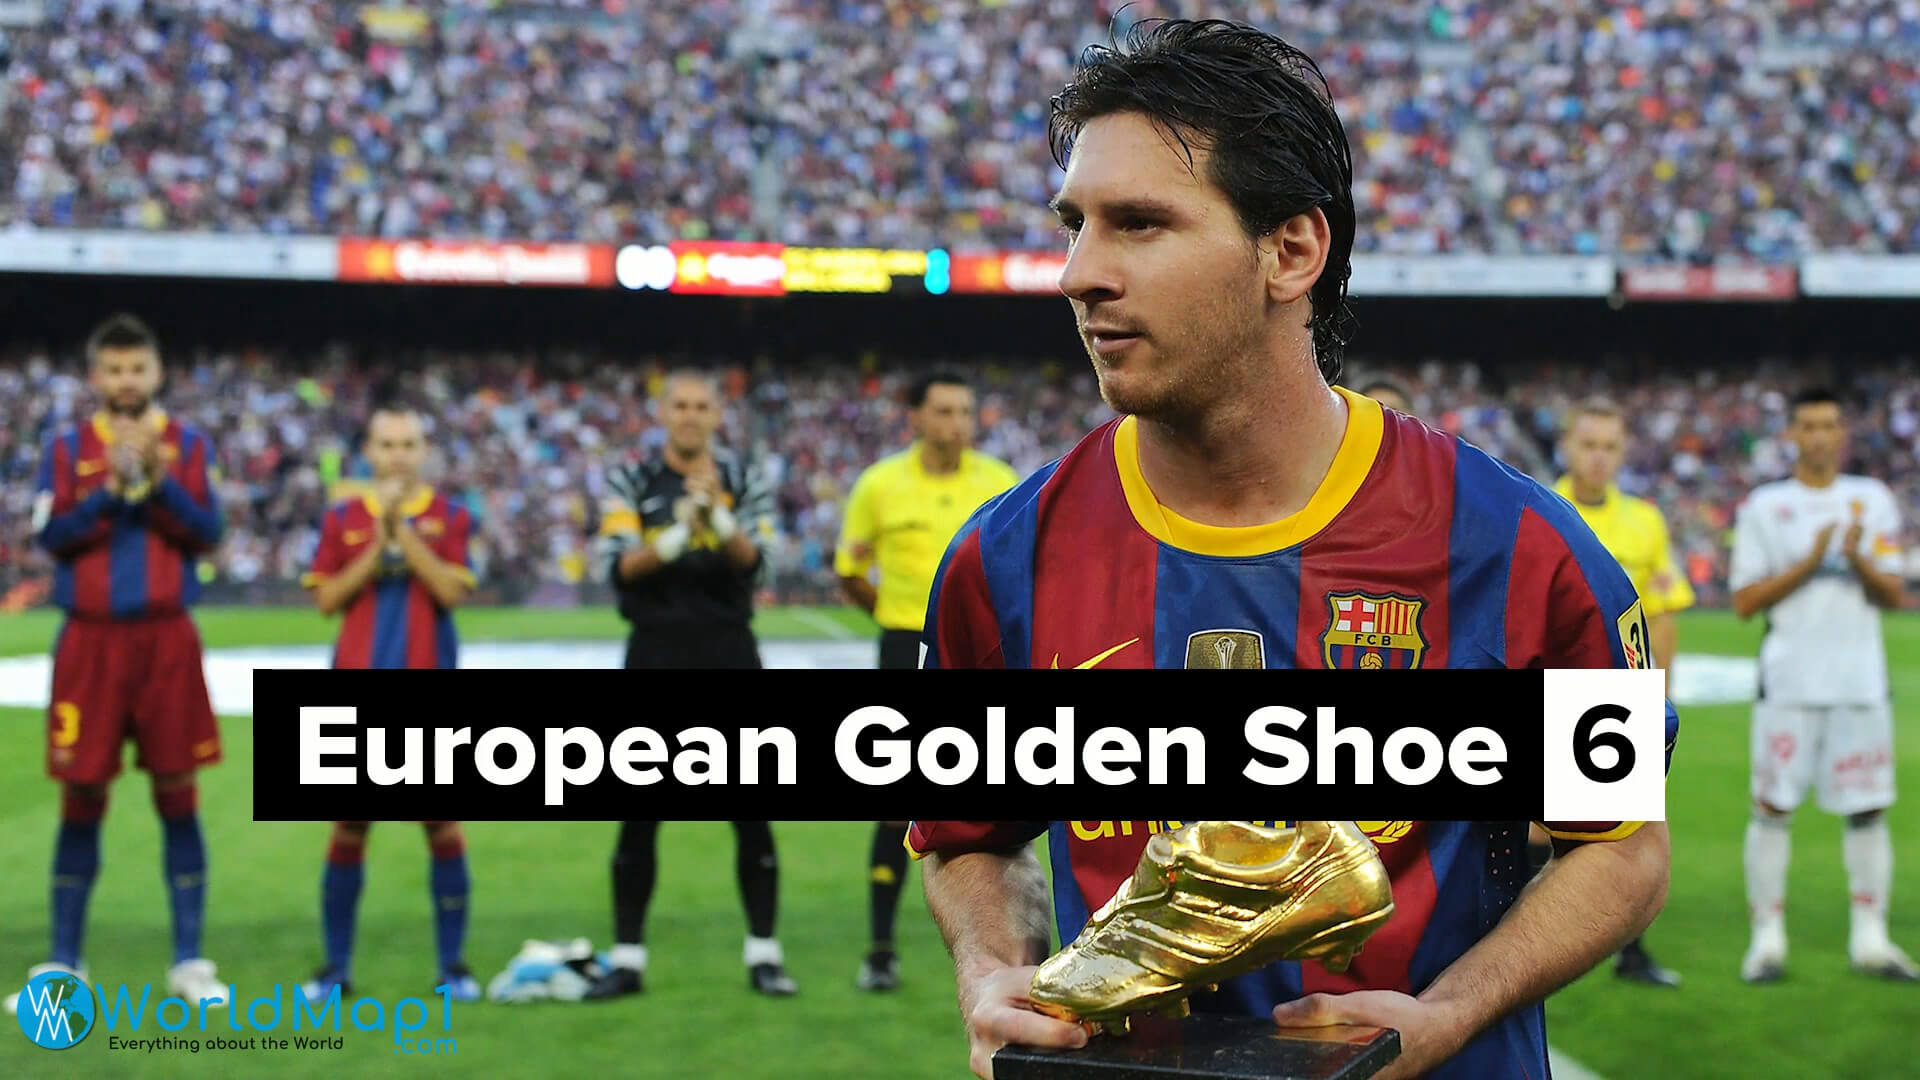 Messi Wins 6 Times European Golden Shoe